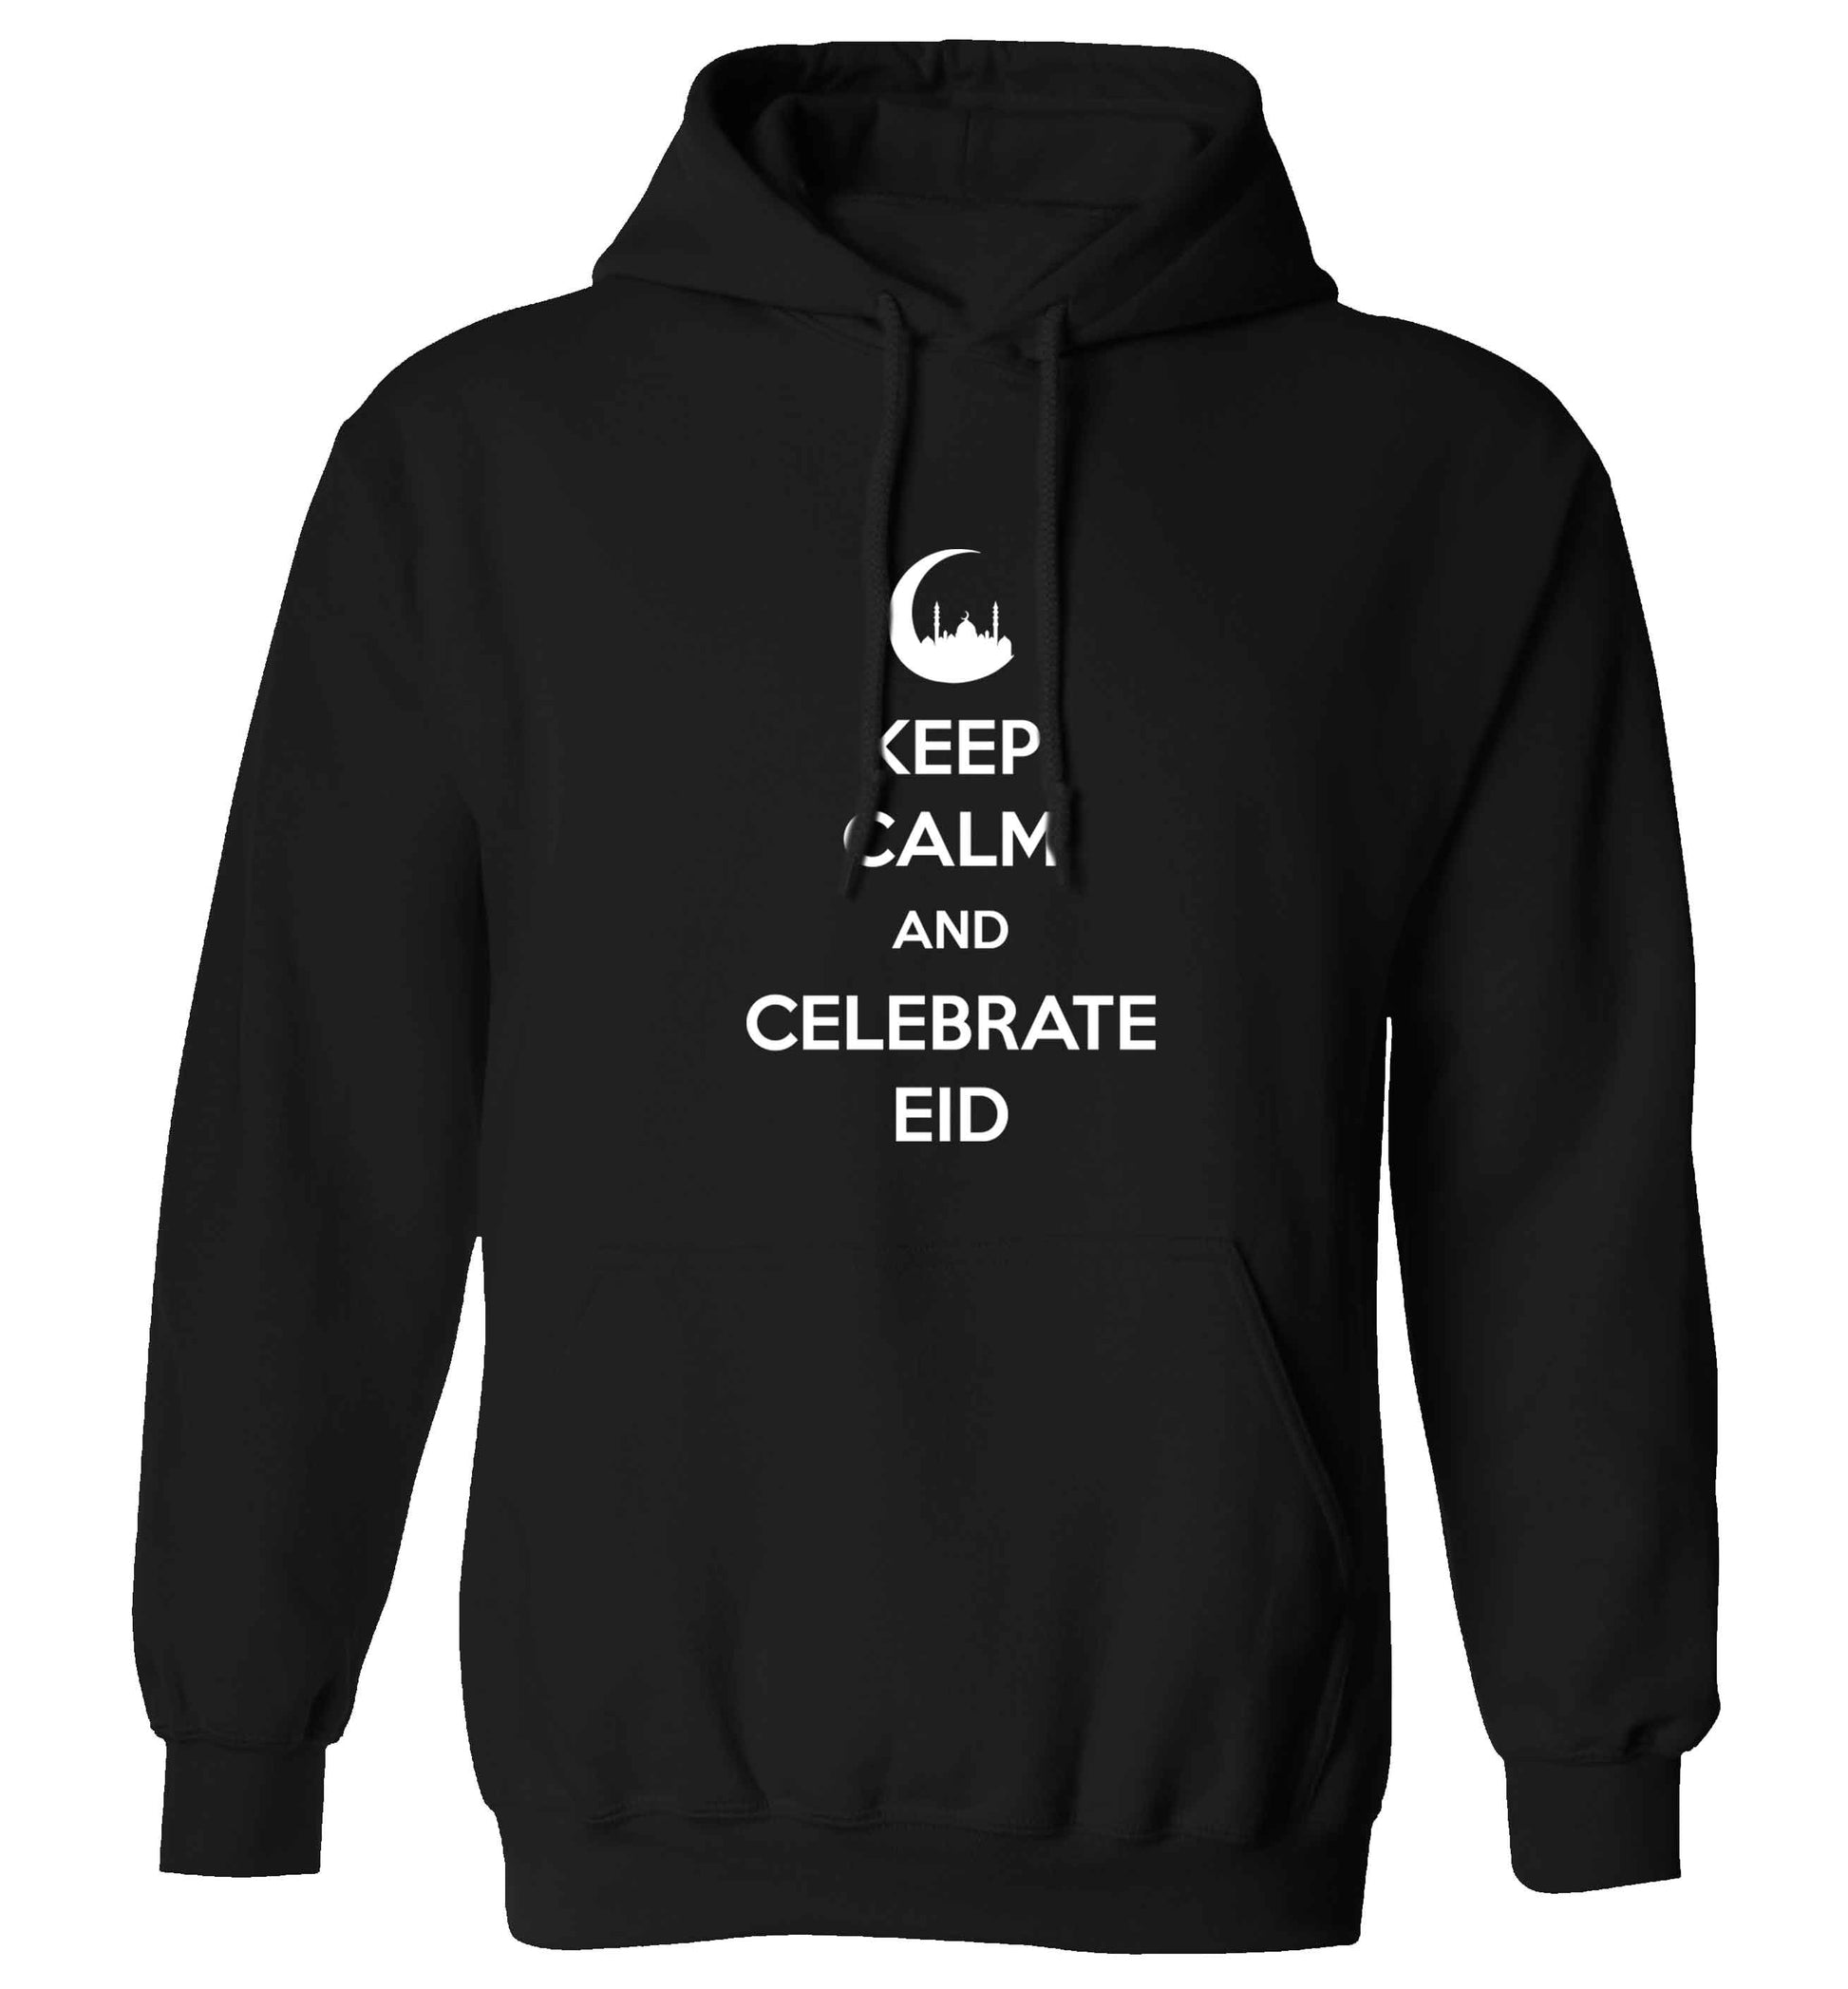 Keep calm and celebrate Eid adults unisex black hoodie 2XL